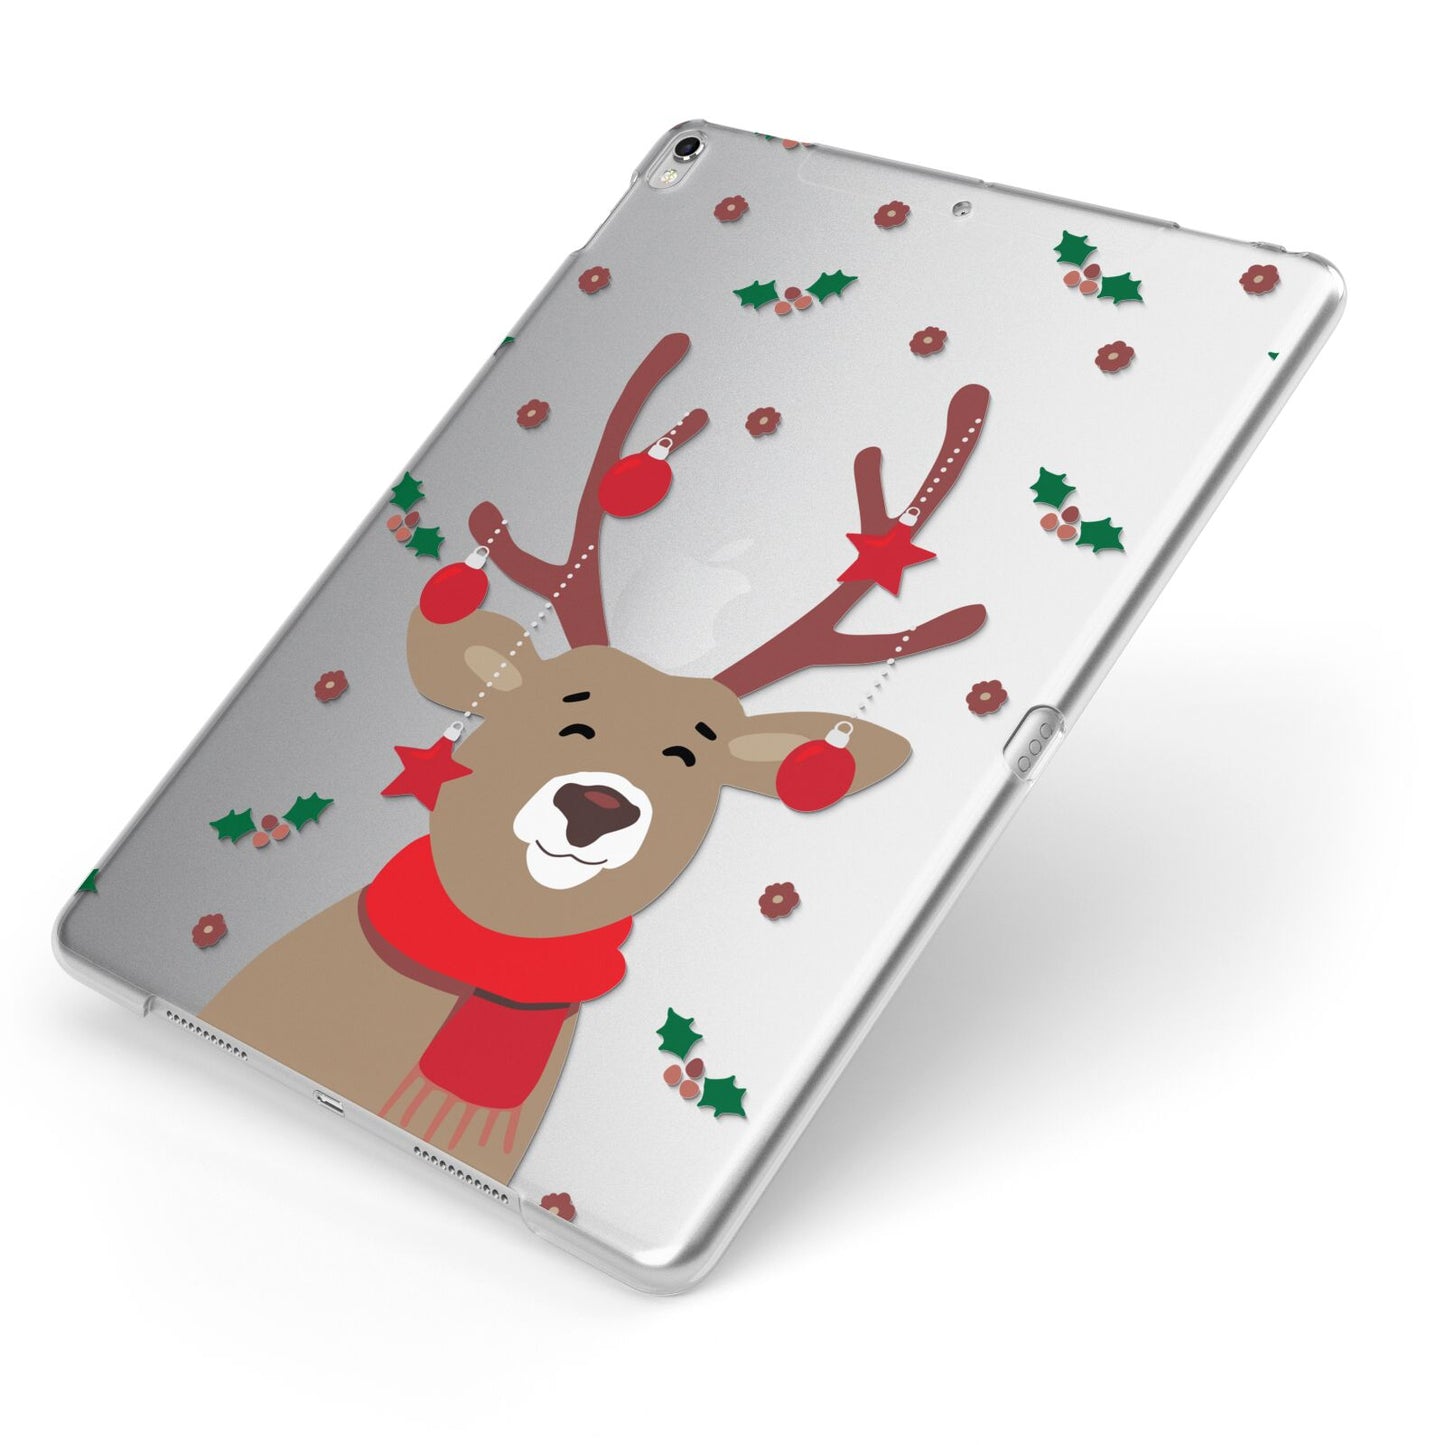 Reindeer Christmas Apple iPad Case on Silver iPad Side View